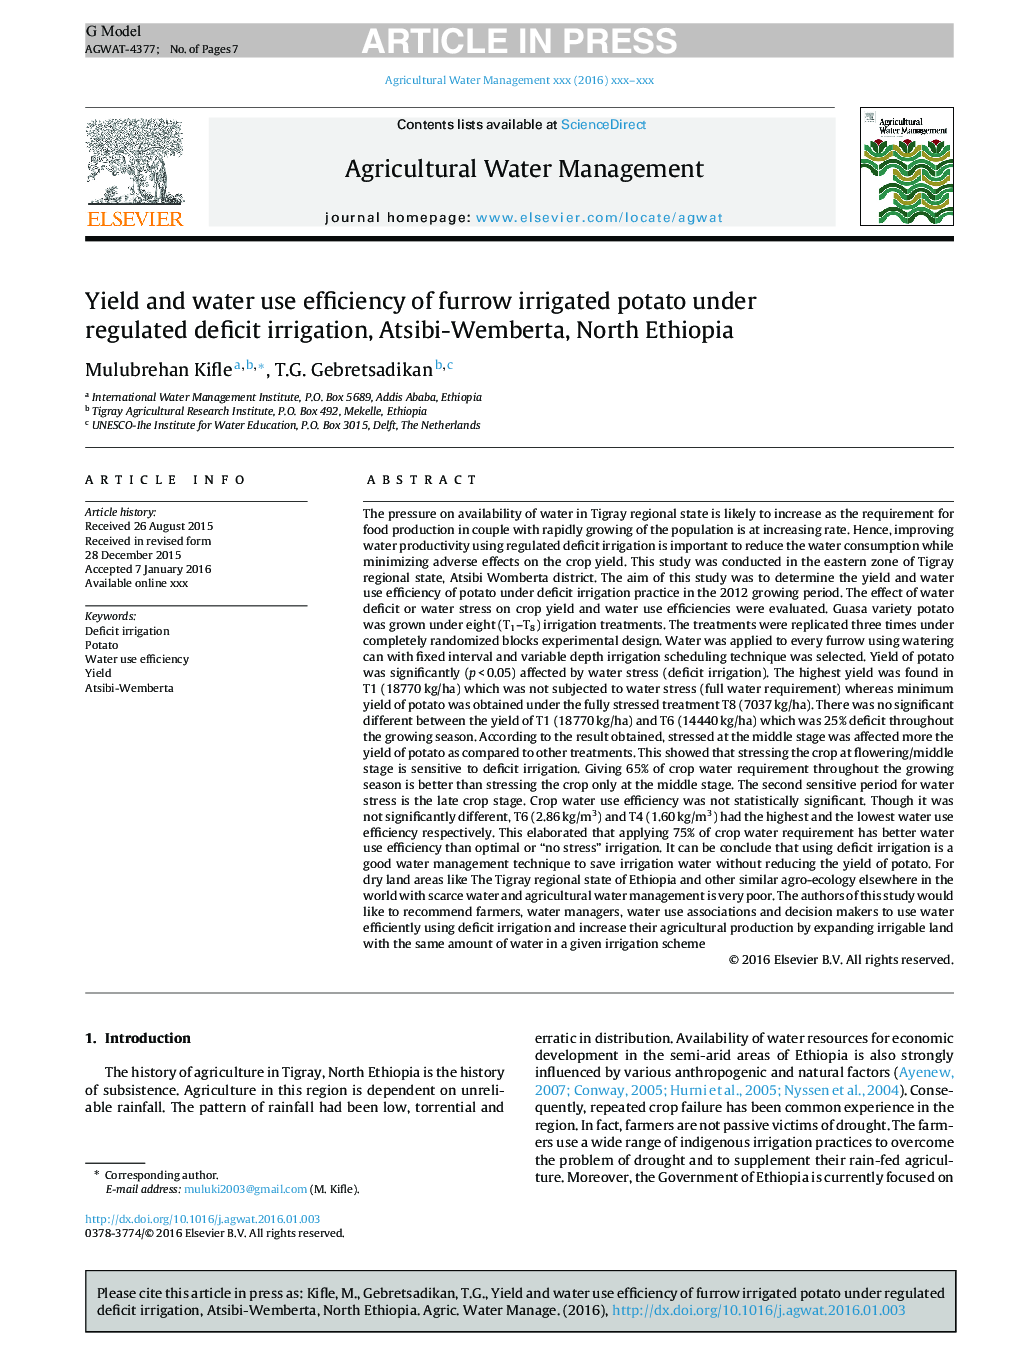 Yield and water use efficiency of furrow irrigated potato under regulated deficit irrigation, Atsibi-Wemberta, North Ethiopia